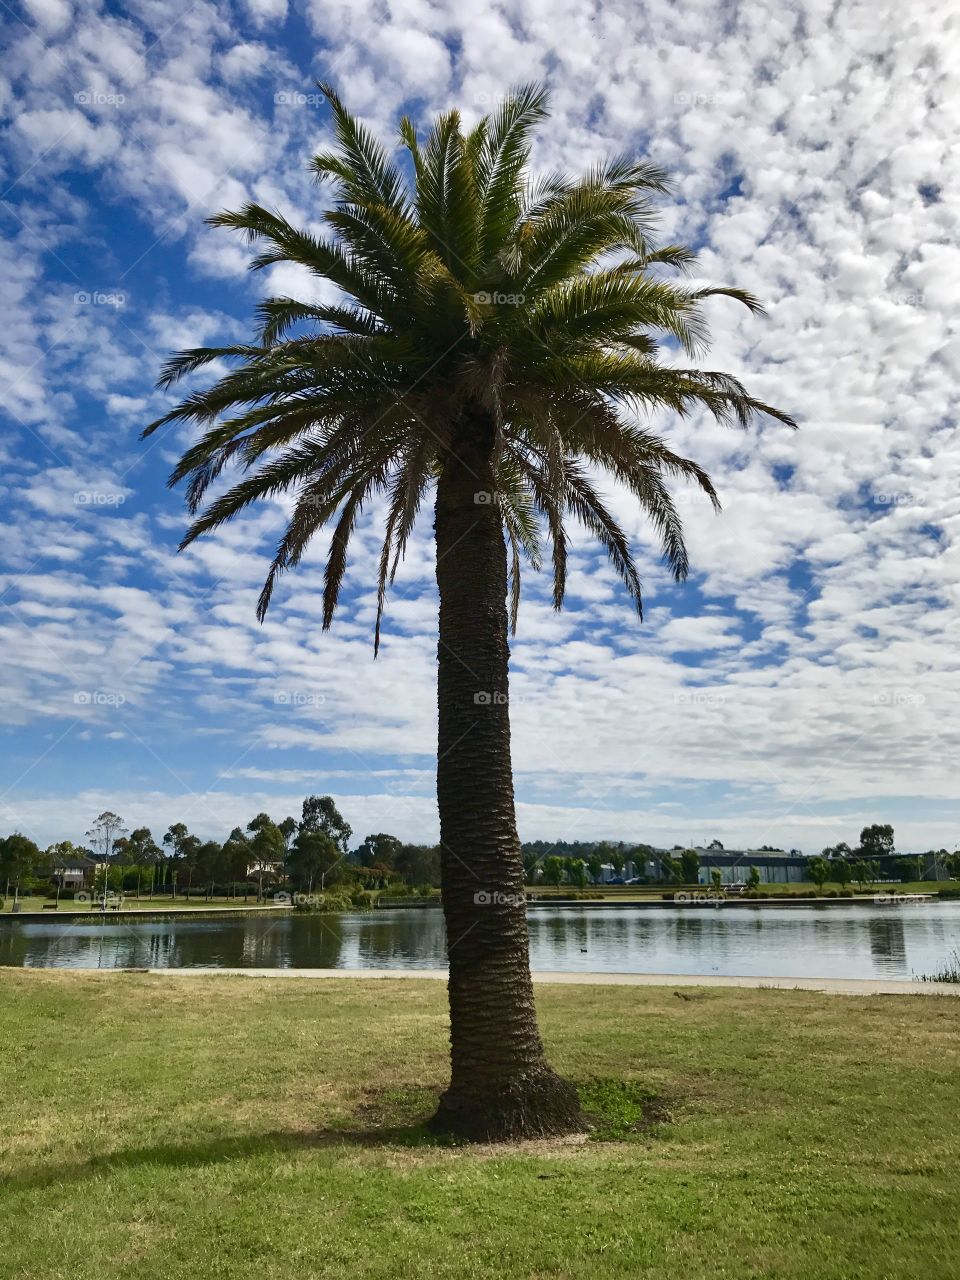 Palm trees line the lake